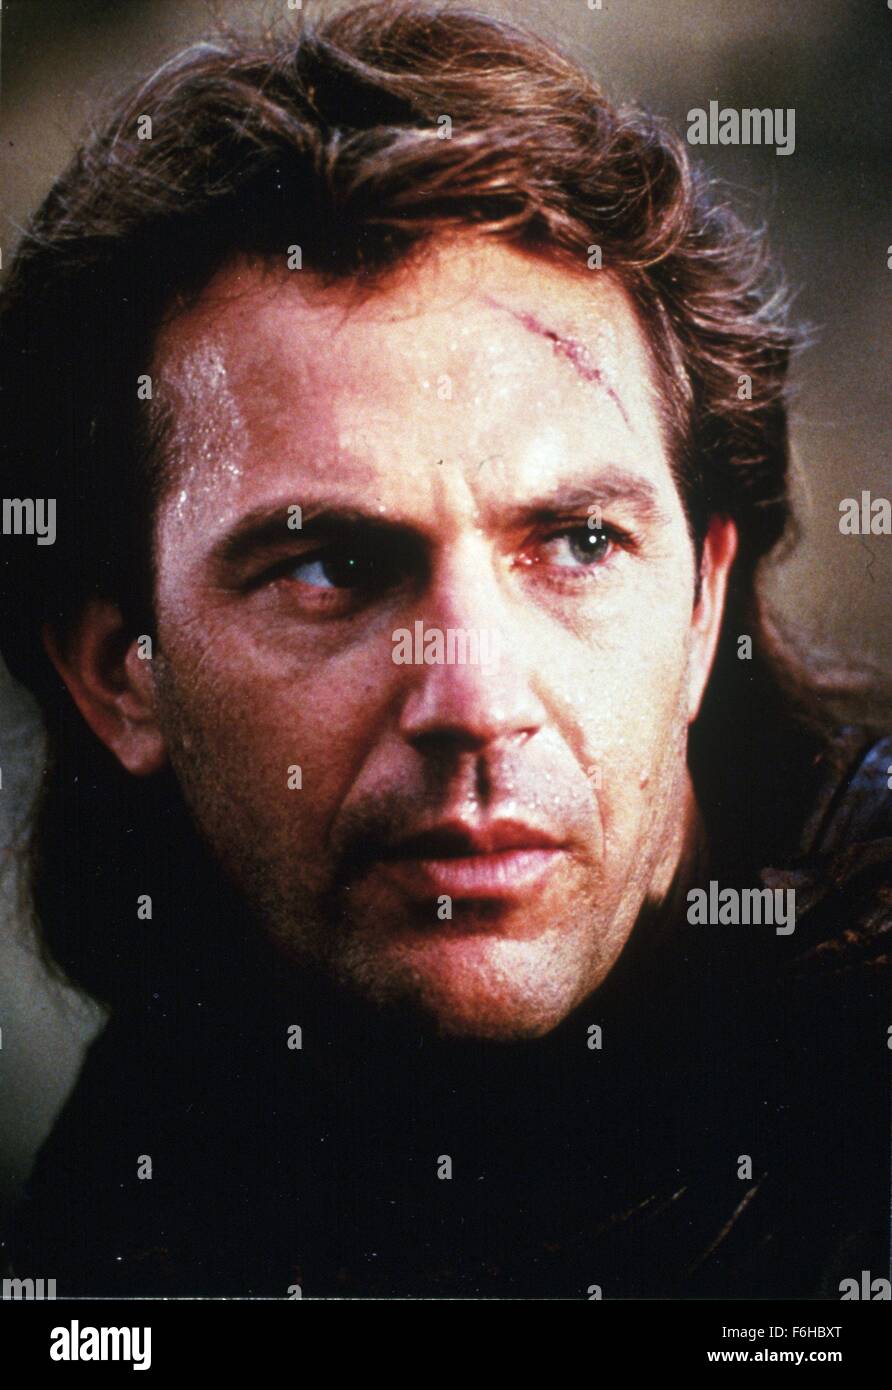 Filmtitel 1991: ROBIN HOOD: Prinz der Diebe, abgebildet: Charakter, KEVIN COSTNER. (Bild Kredit: SNAP) Stockfoto